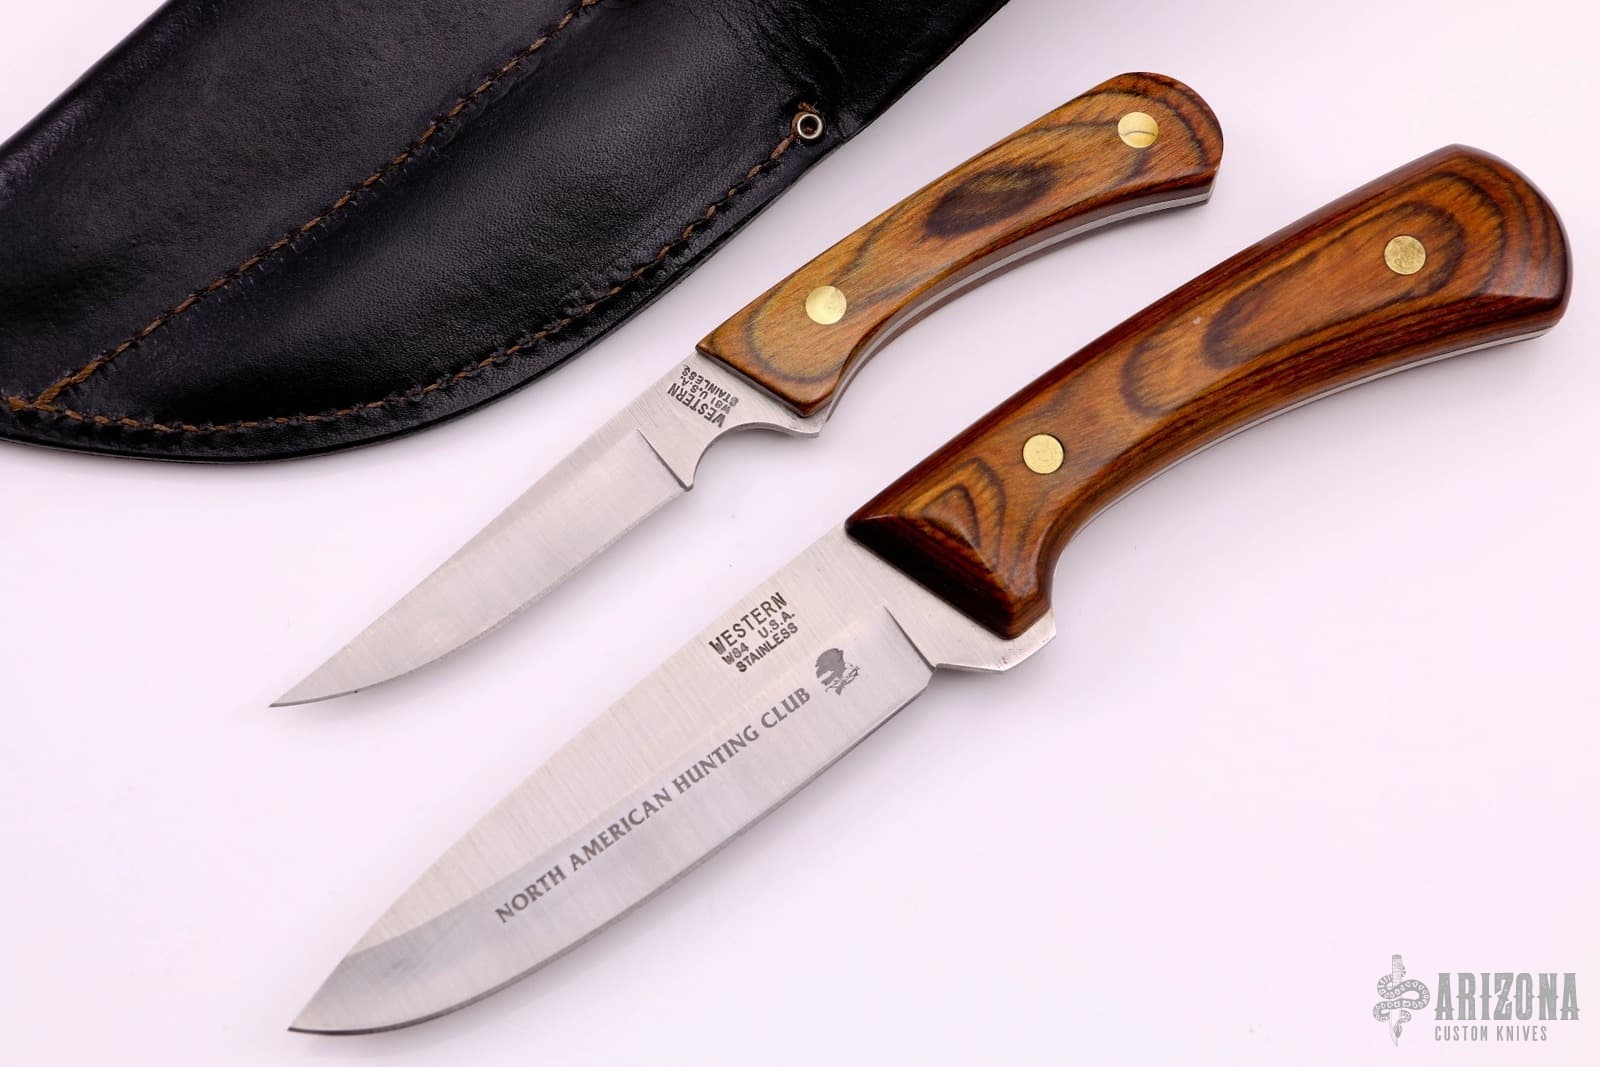 North American hunting Club Set - Arizona Custom Knives